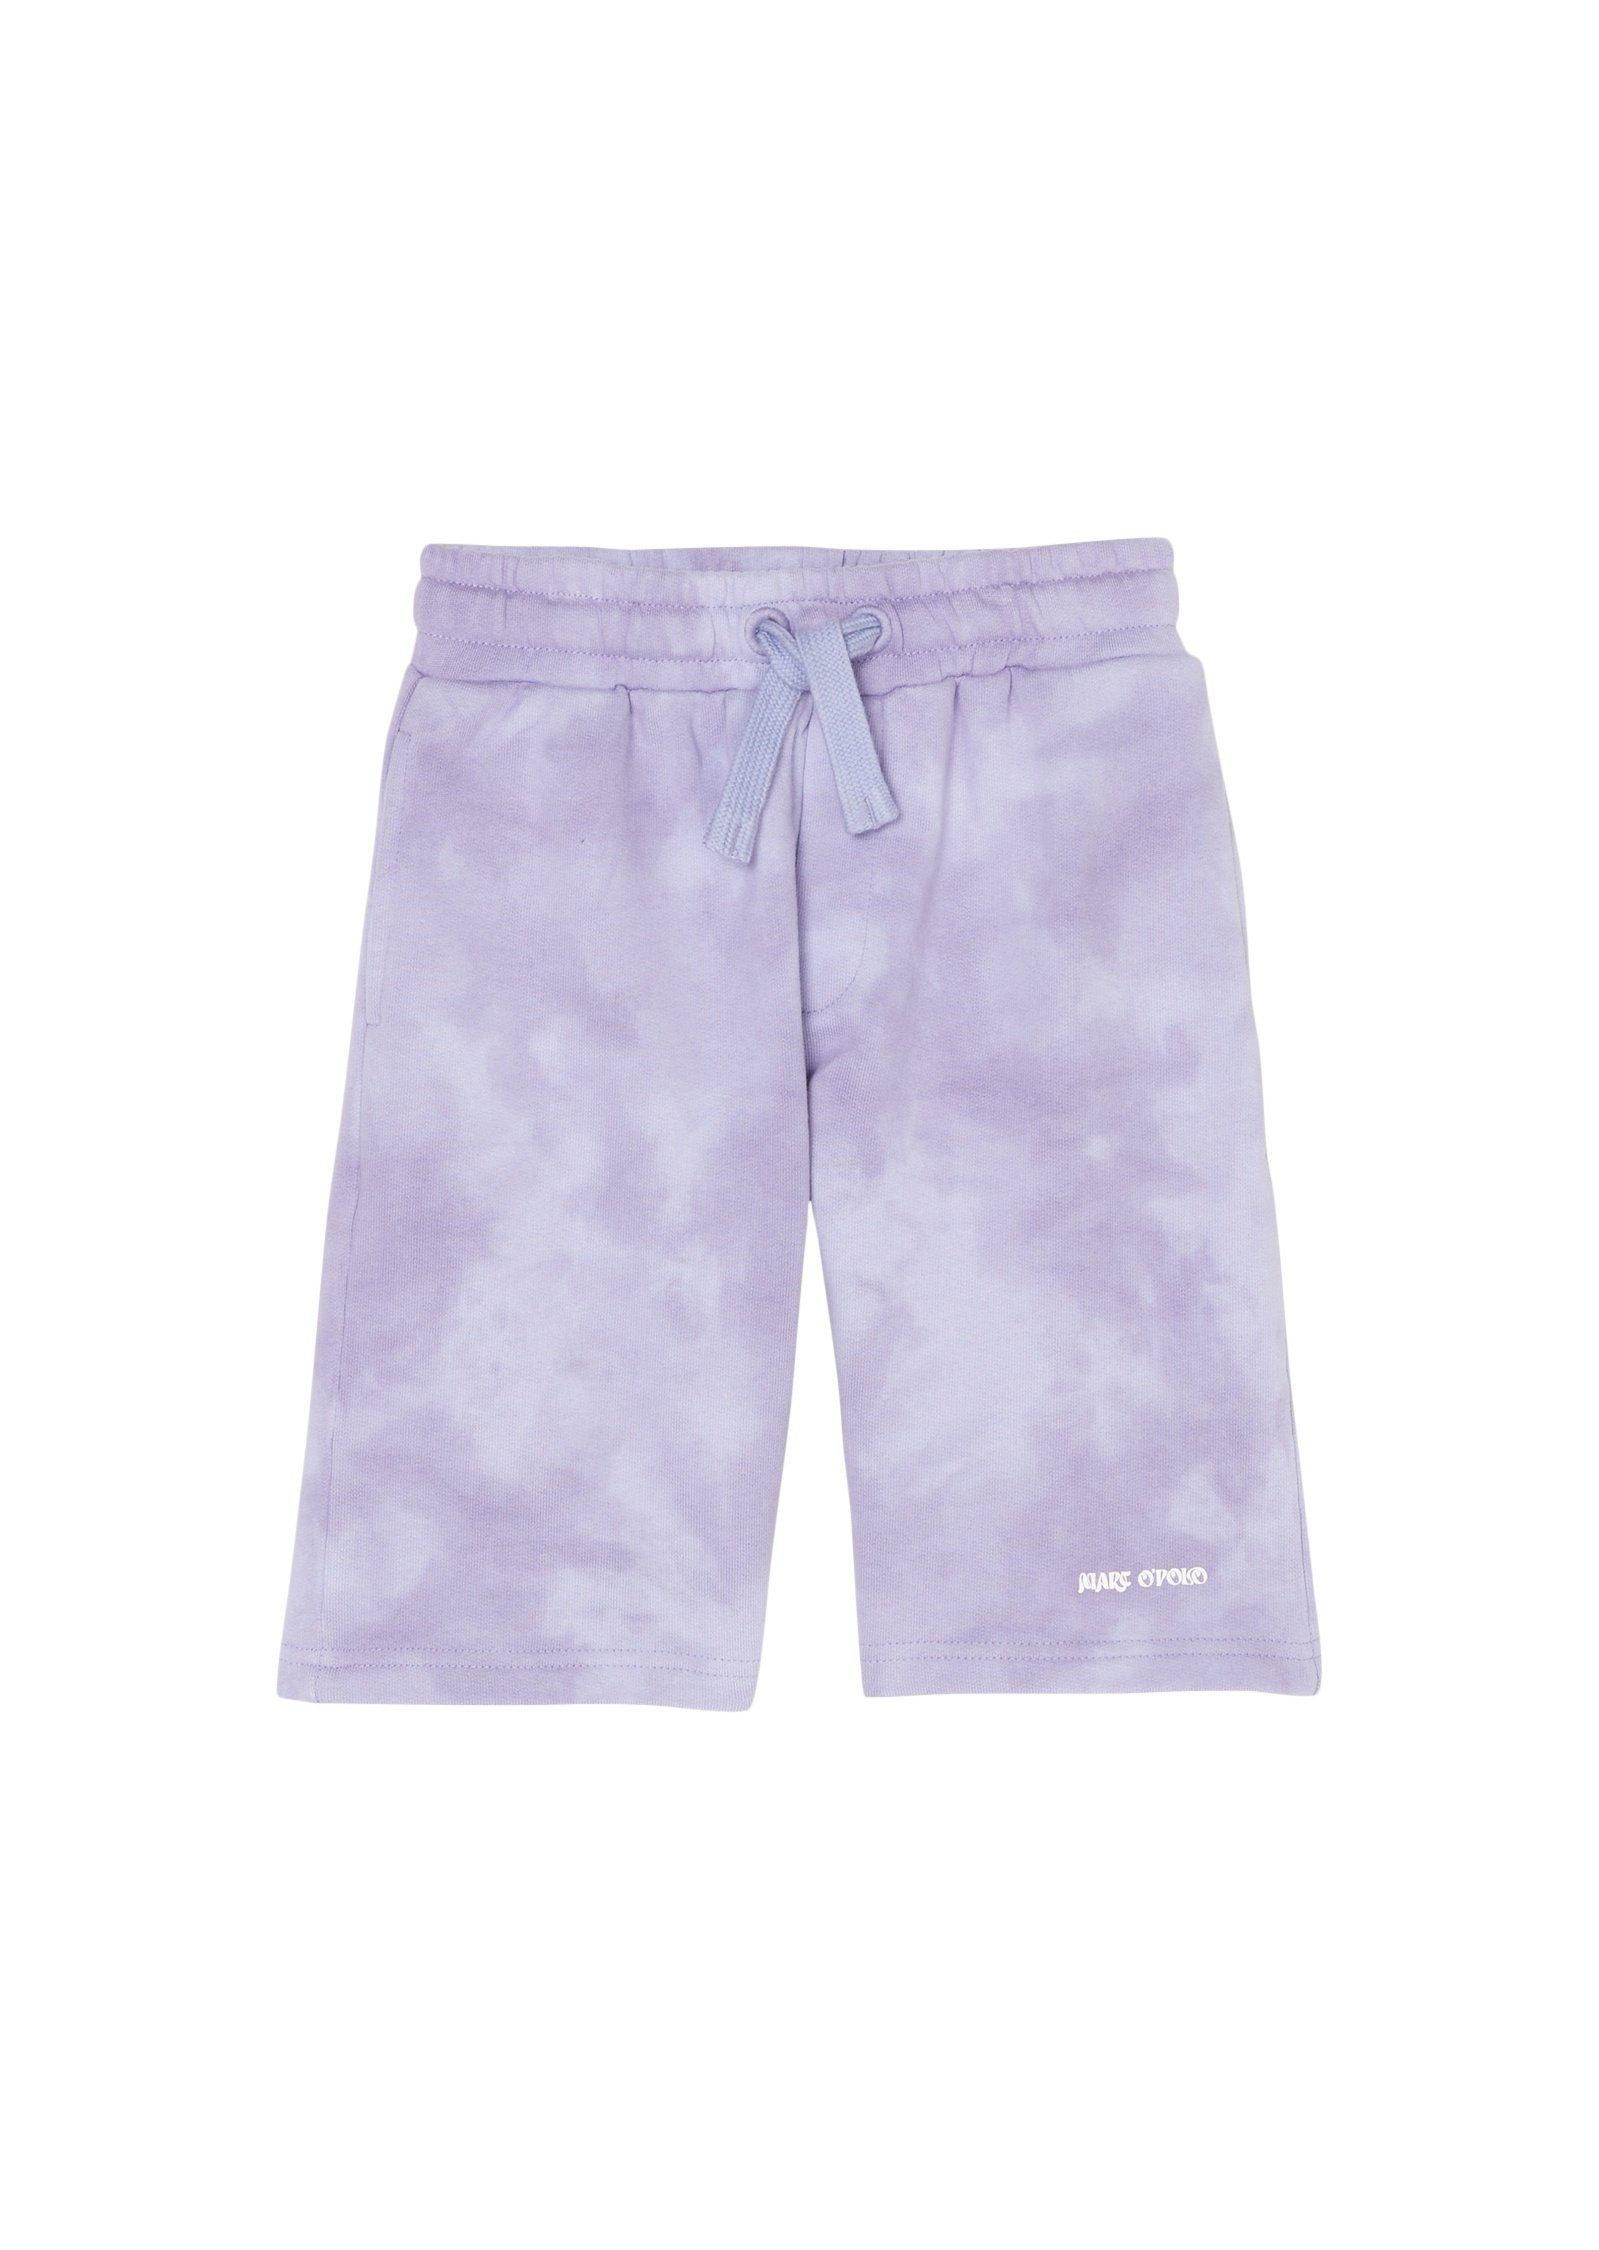 Marc O'Polo Shorts im Batik-Dessin lila